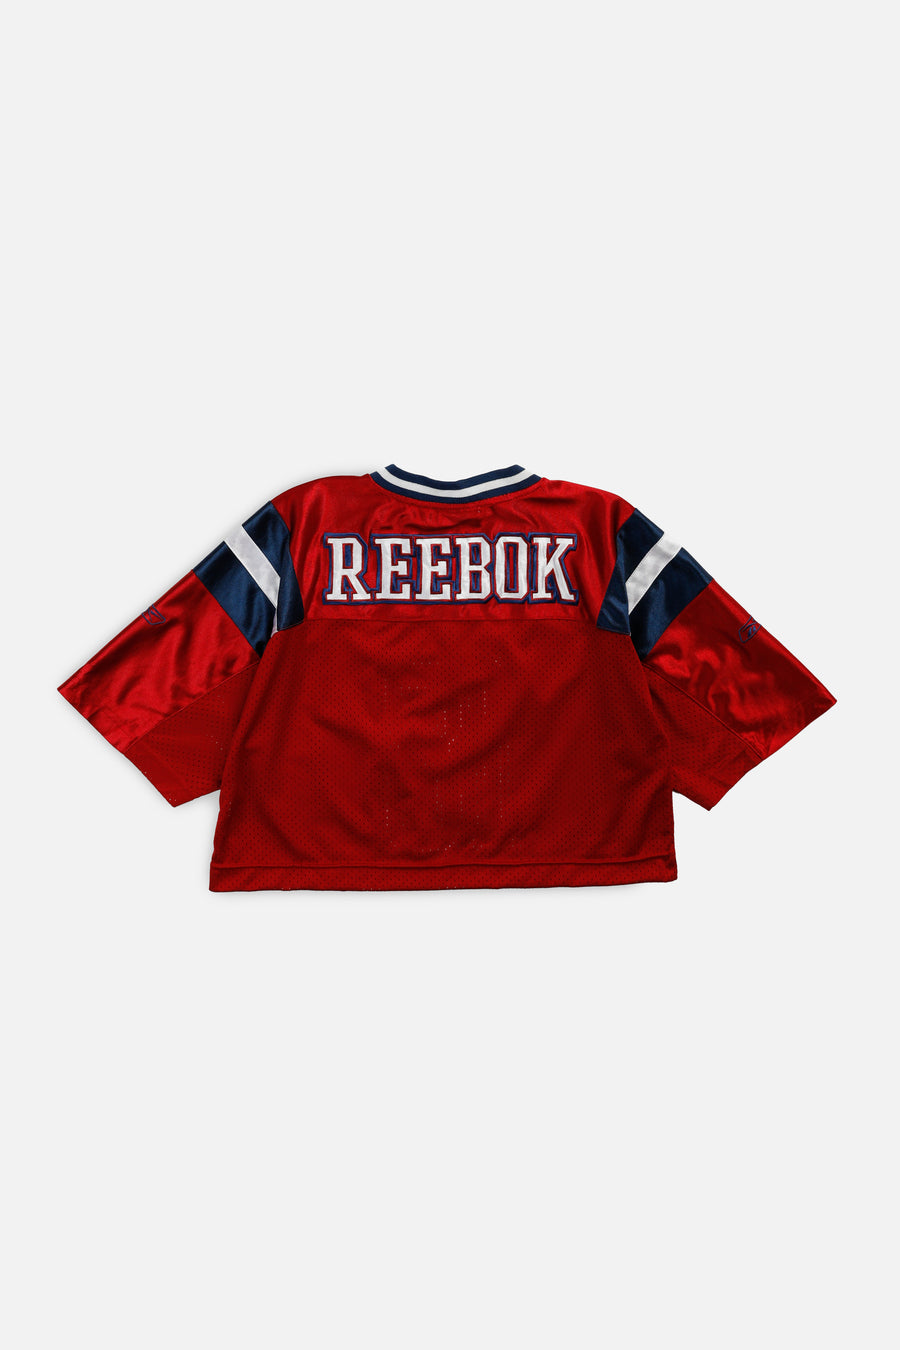 Rework Crop Reebok Football Jersey - S